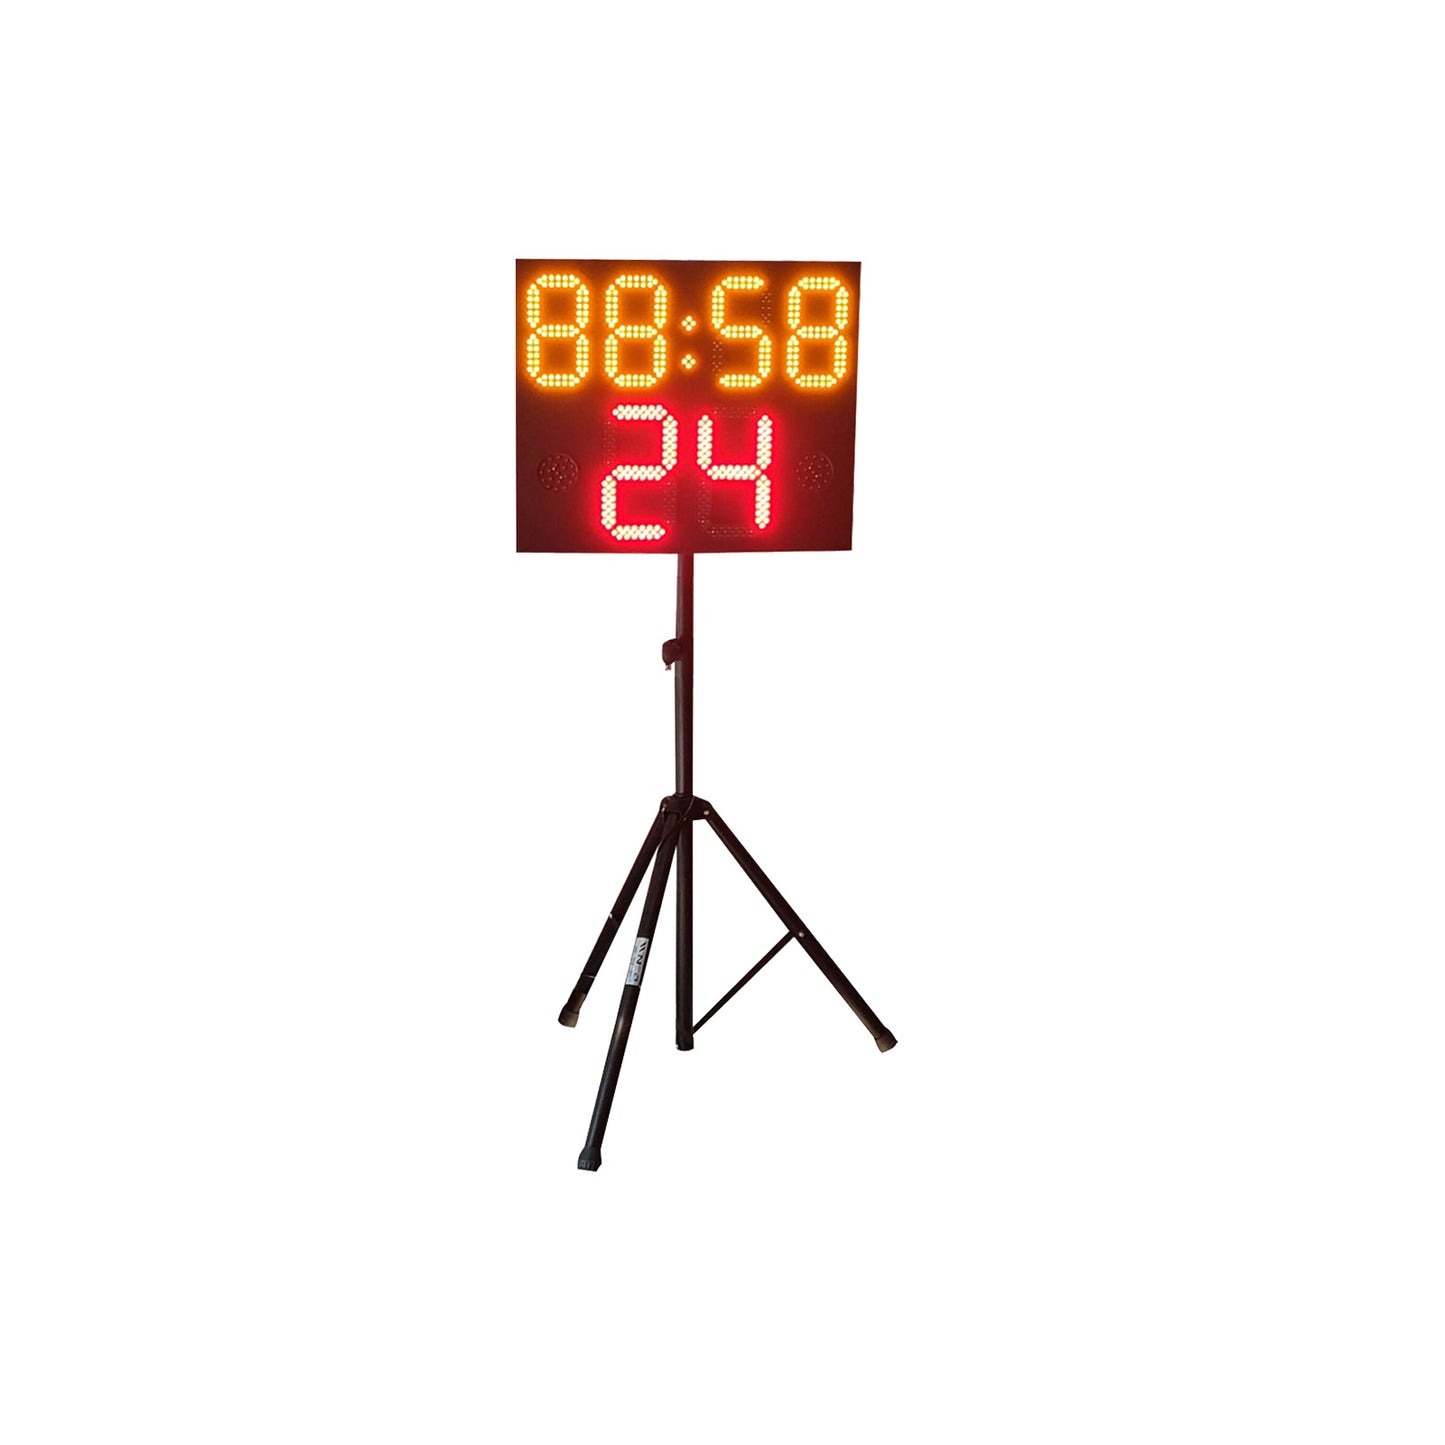 24'' Countdown Time LED Display